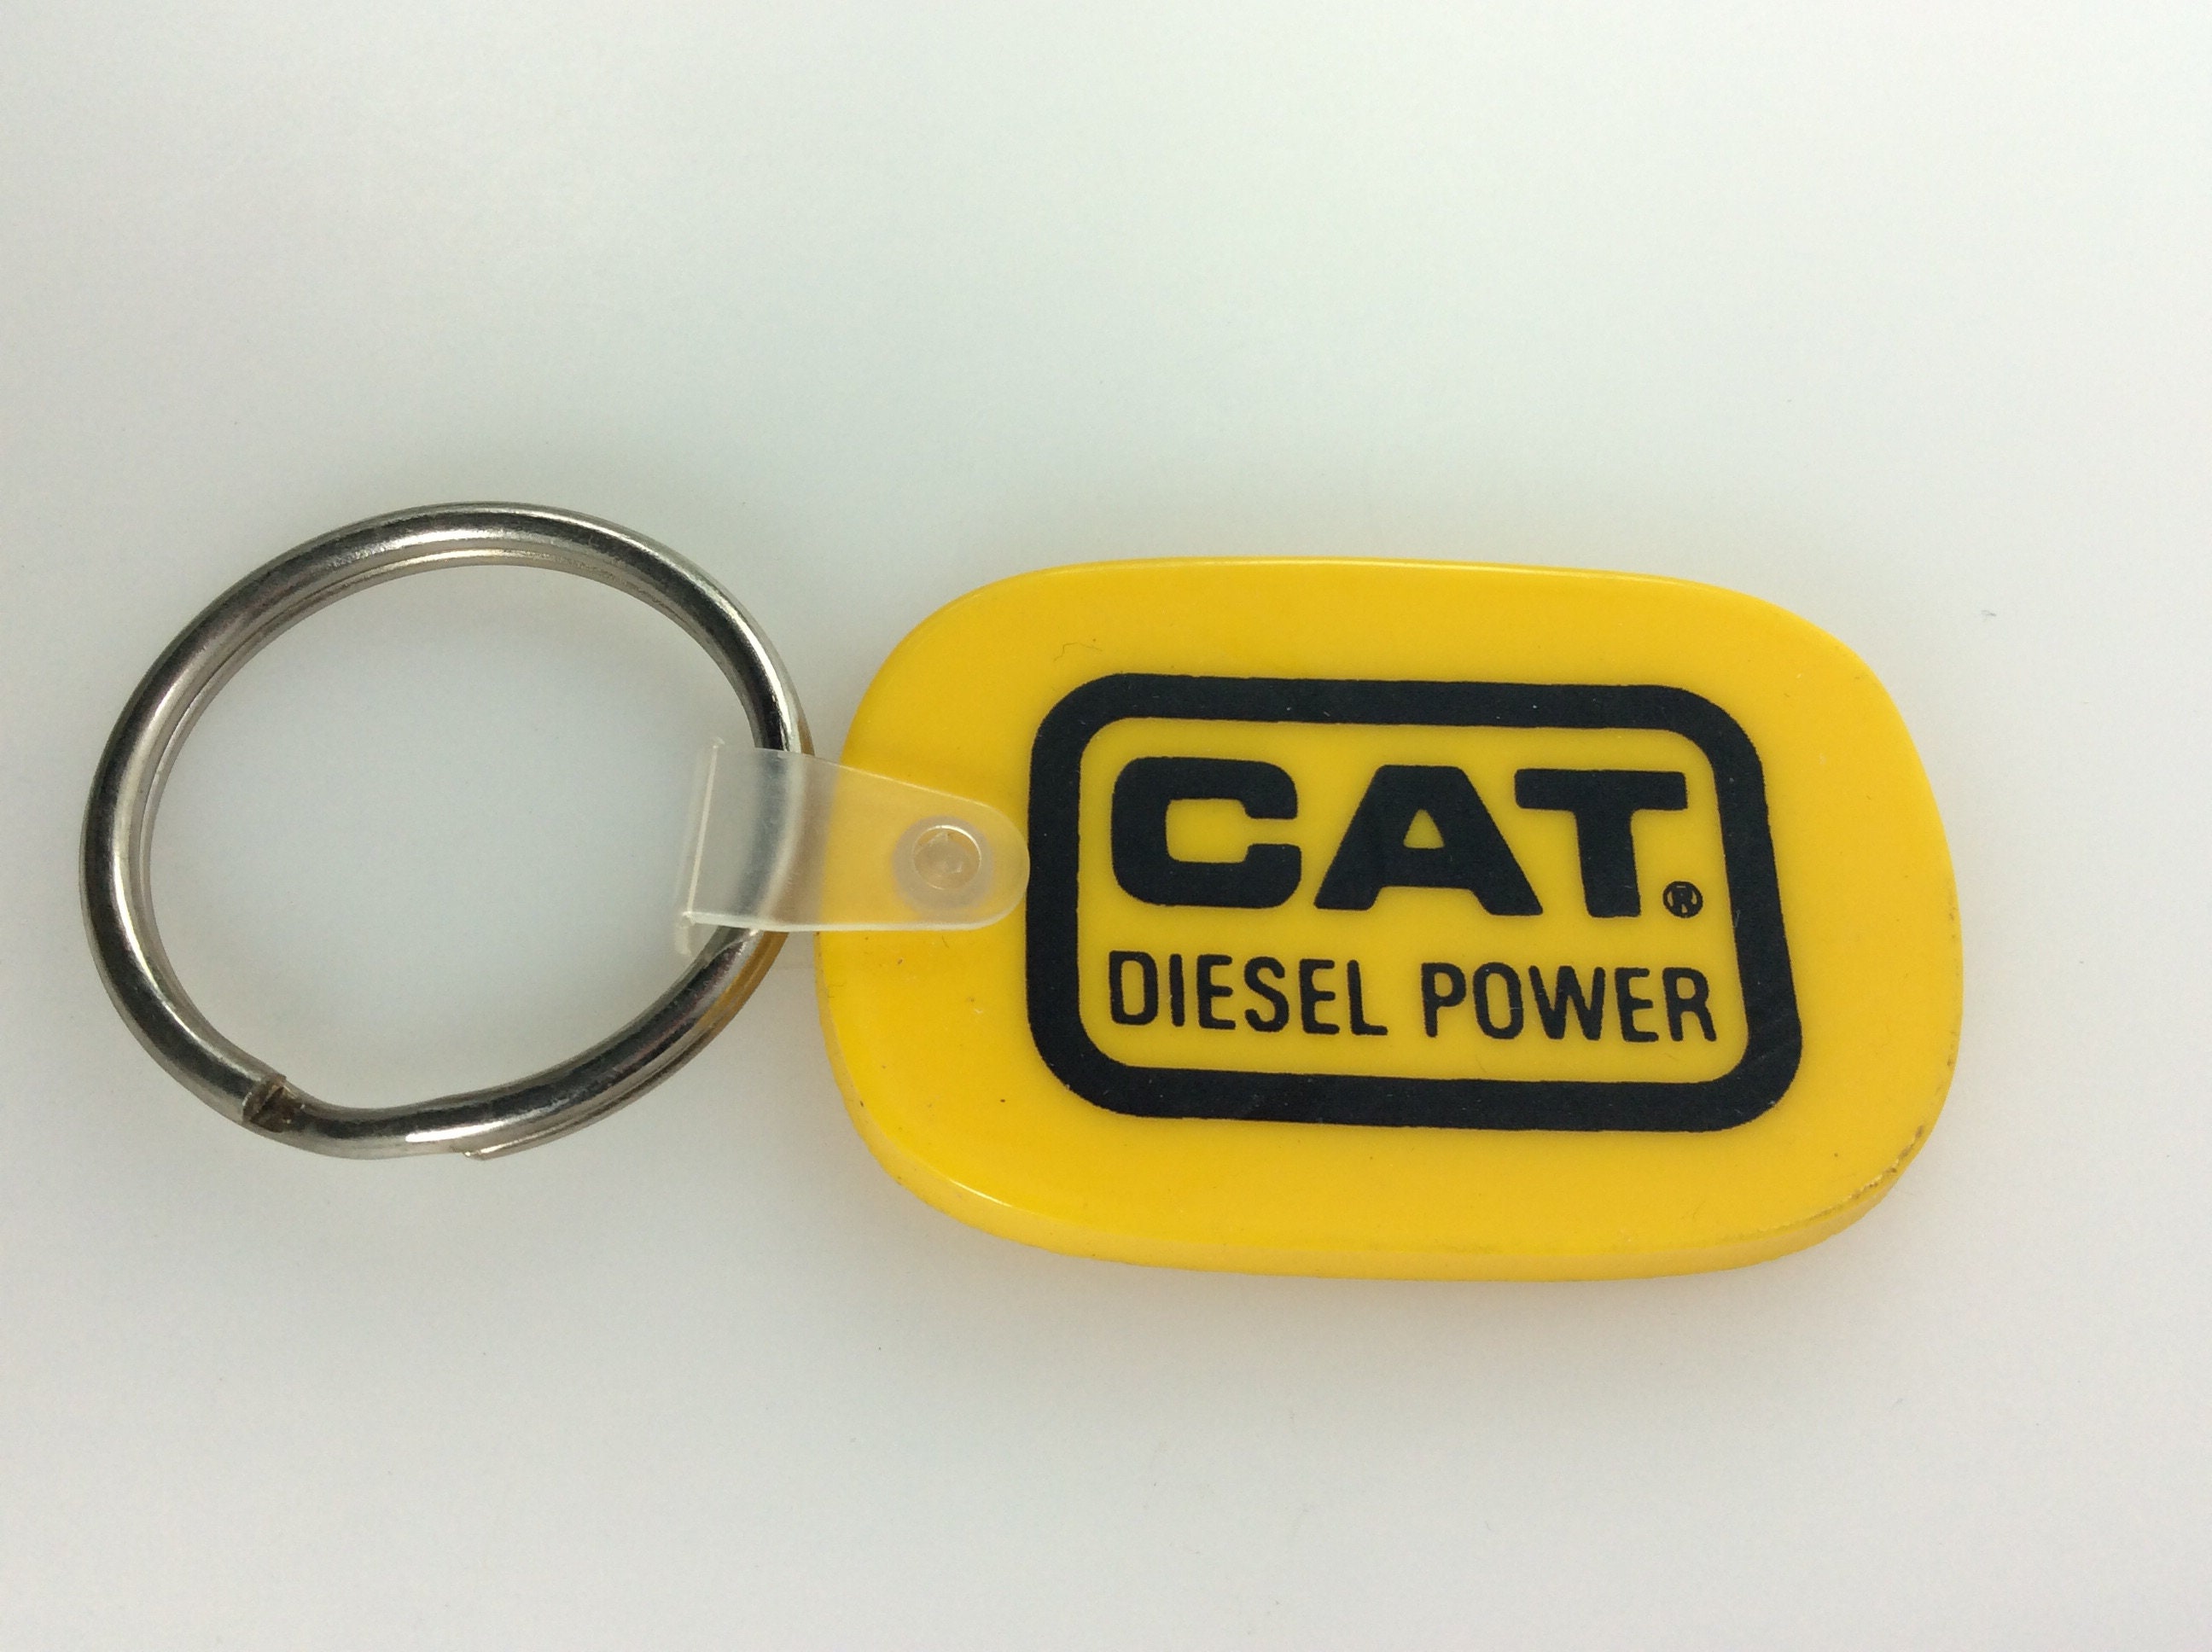 Caterpillar Diesel Power Key chain